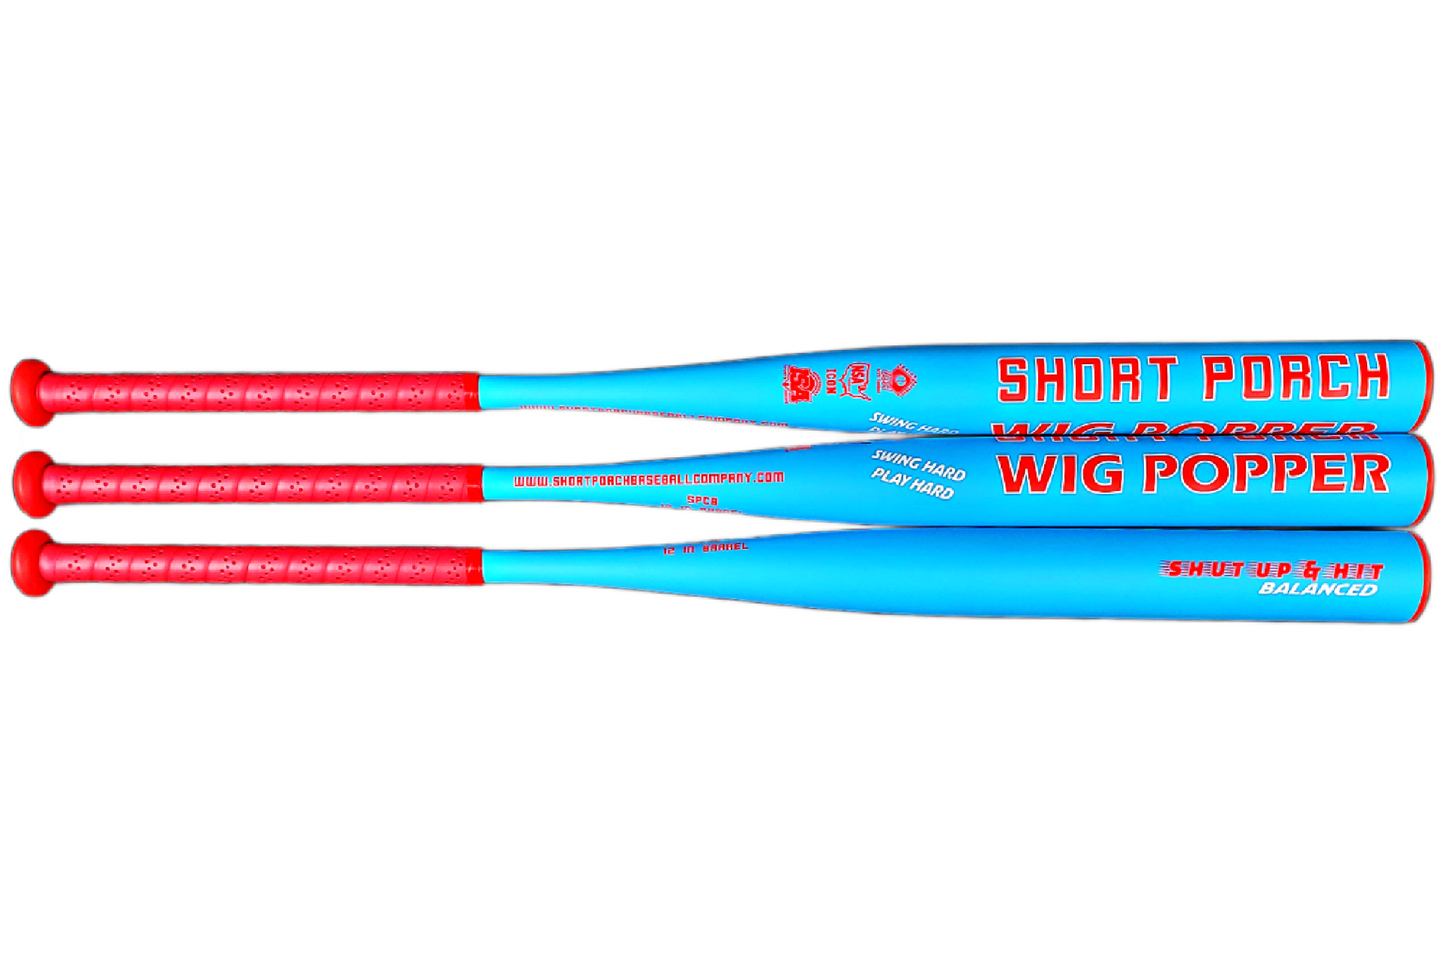 Short Porch Wig Popper Balanced - Senior Slow Pitch Softball Bat - 1-piece 12 inch